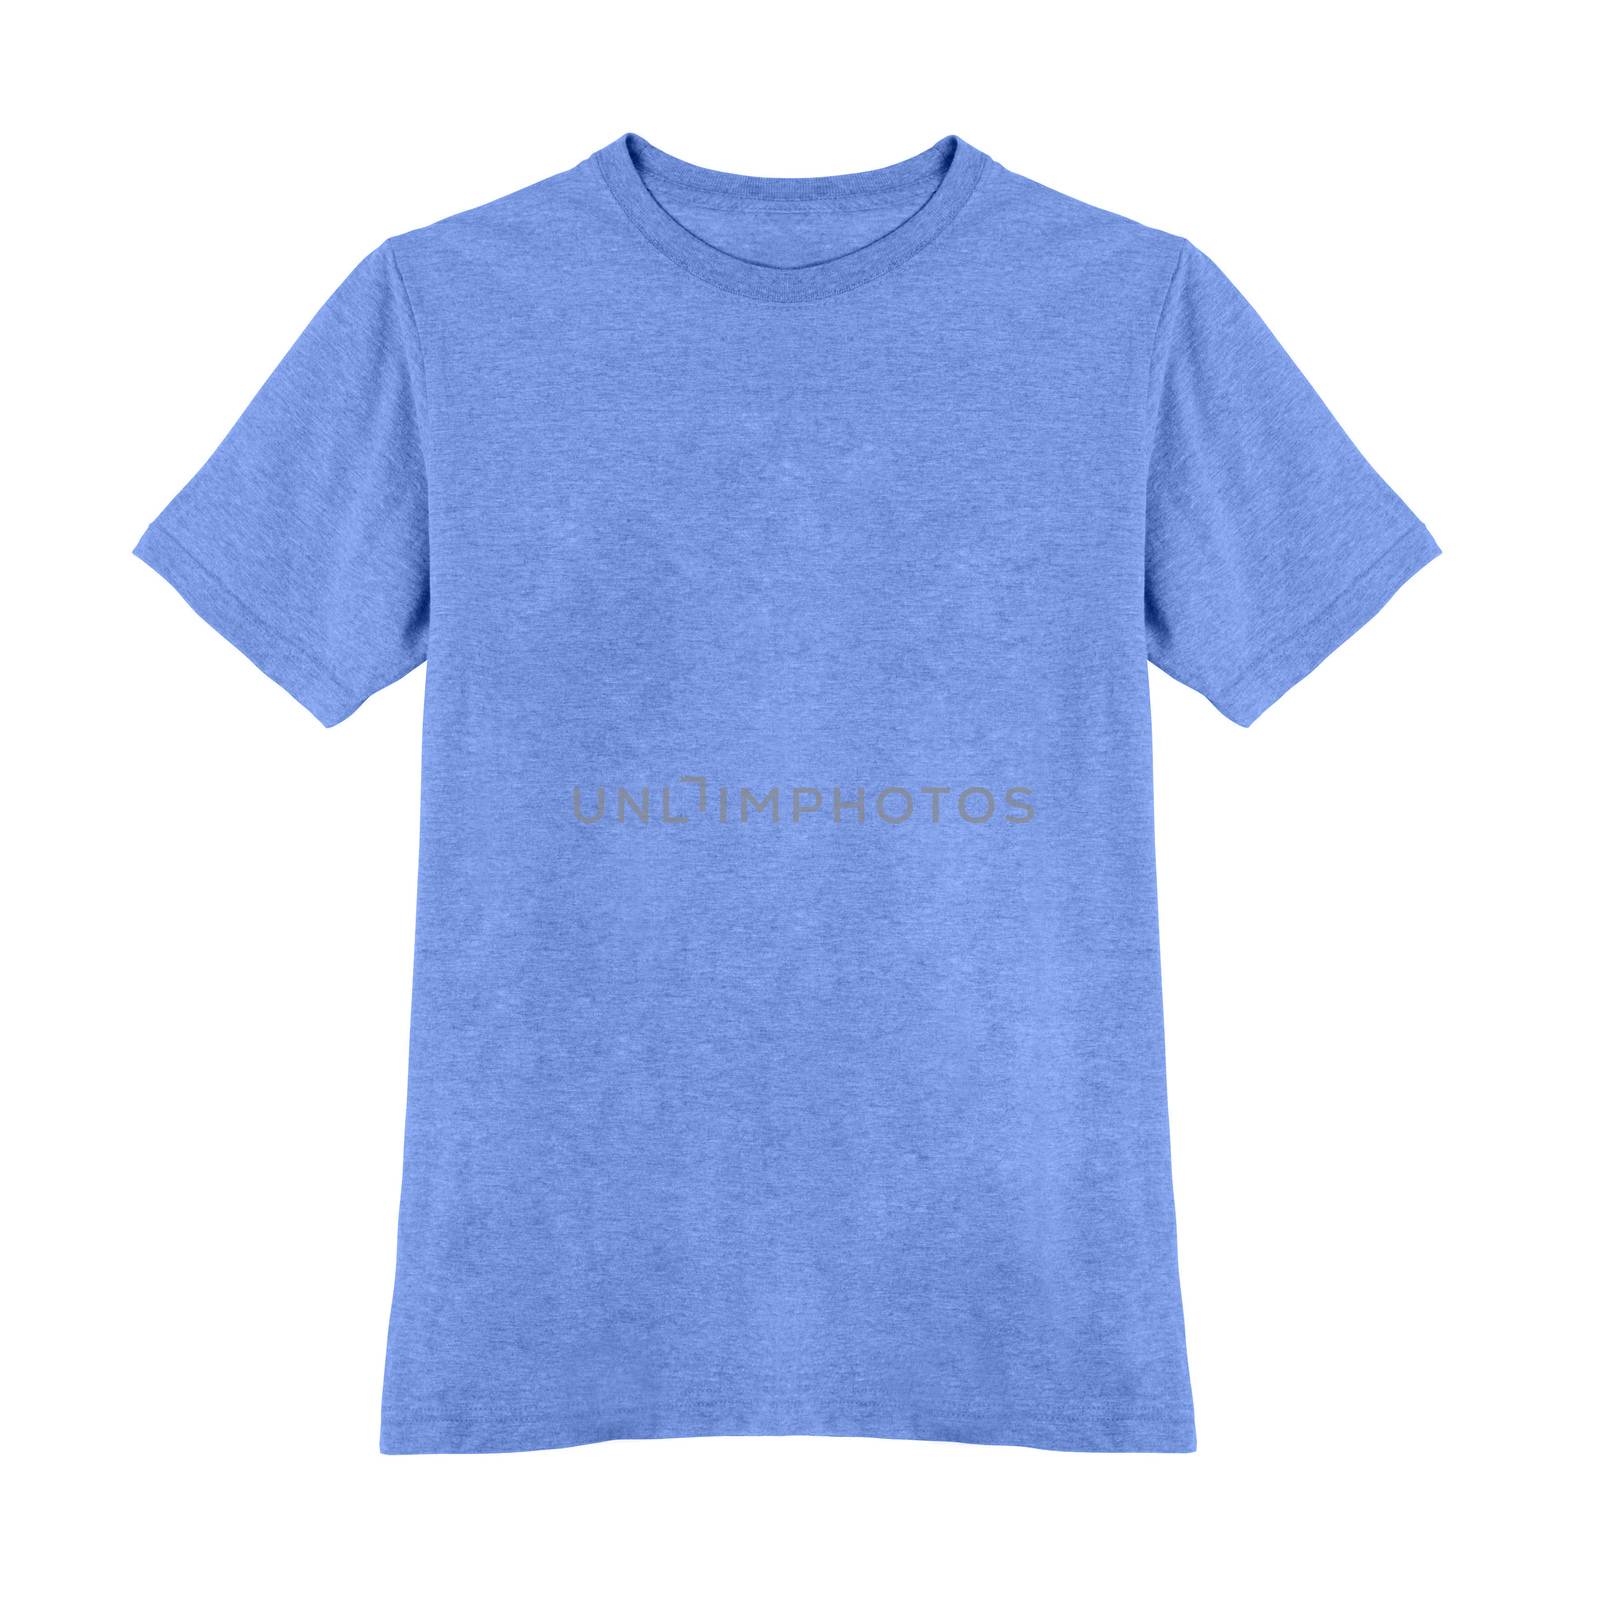 blue tshirt isolated on white